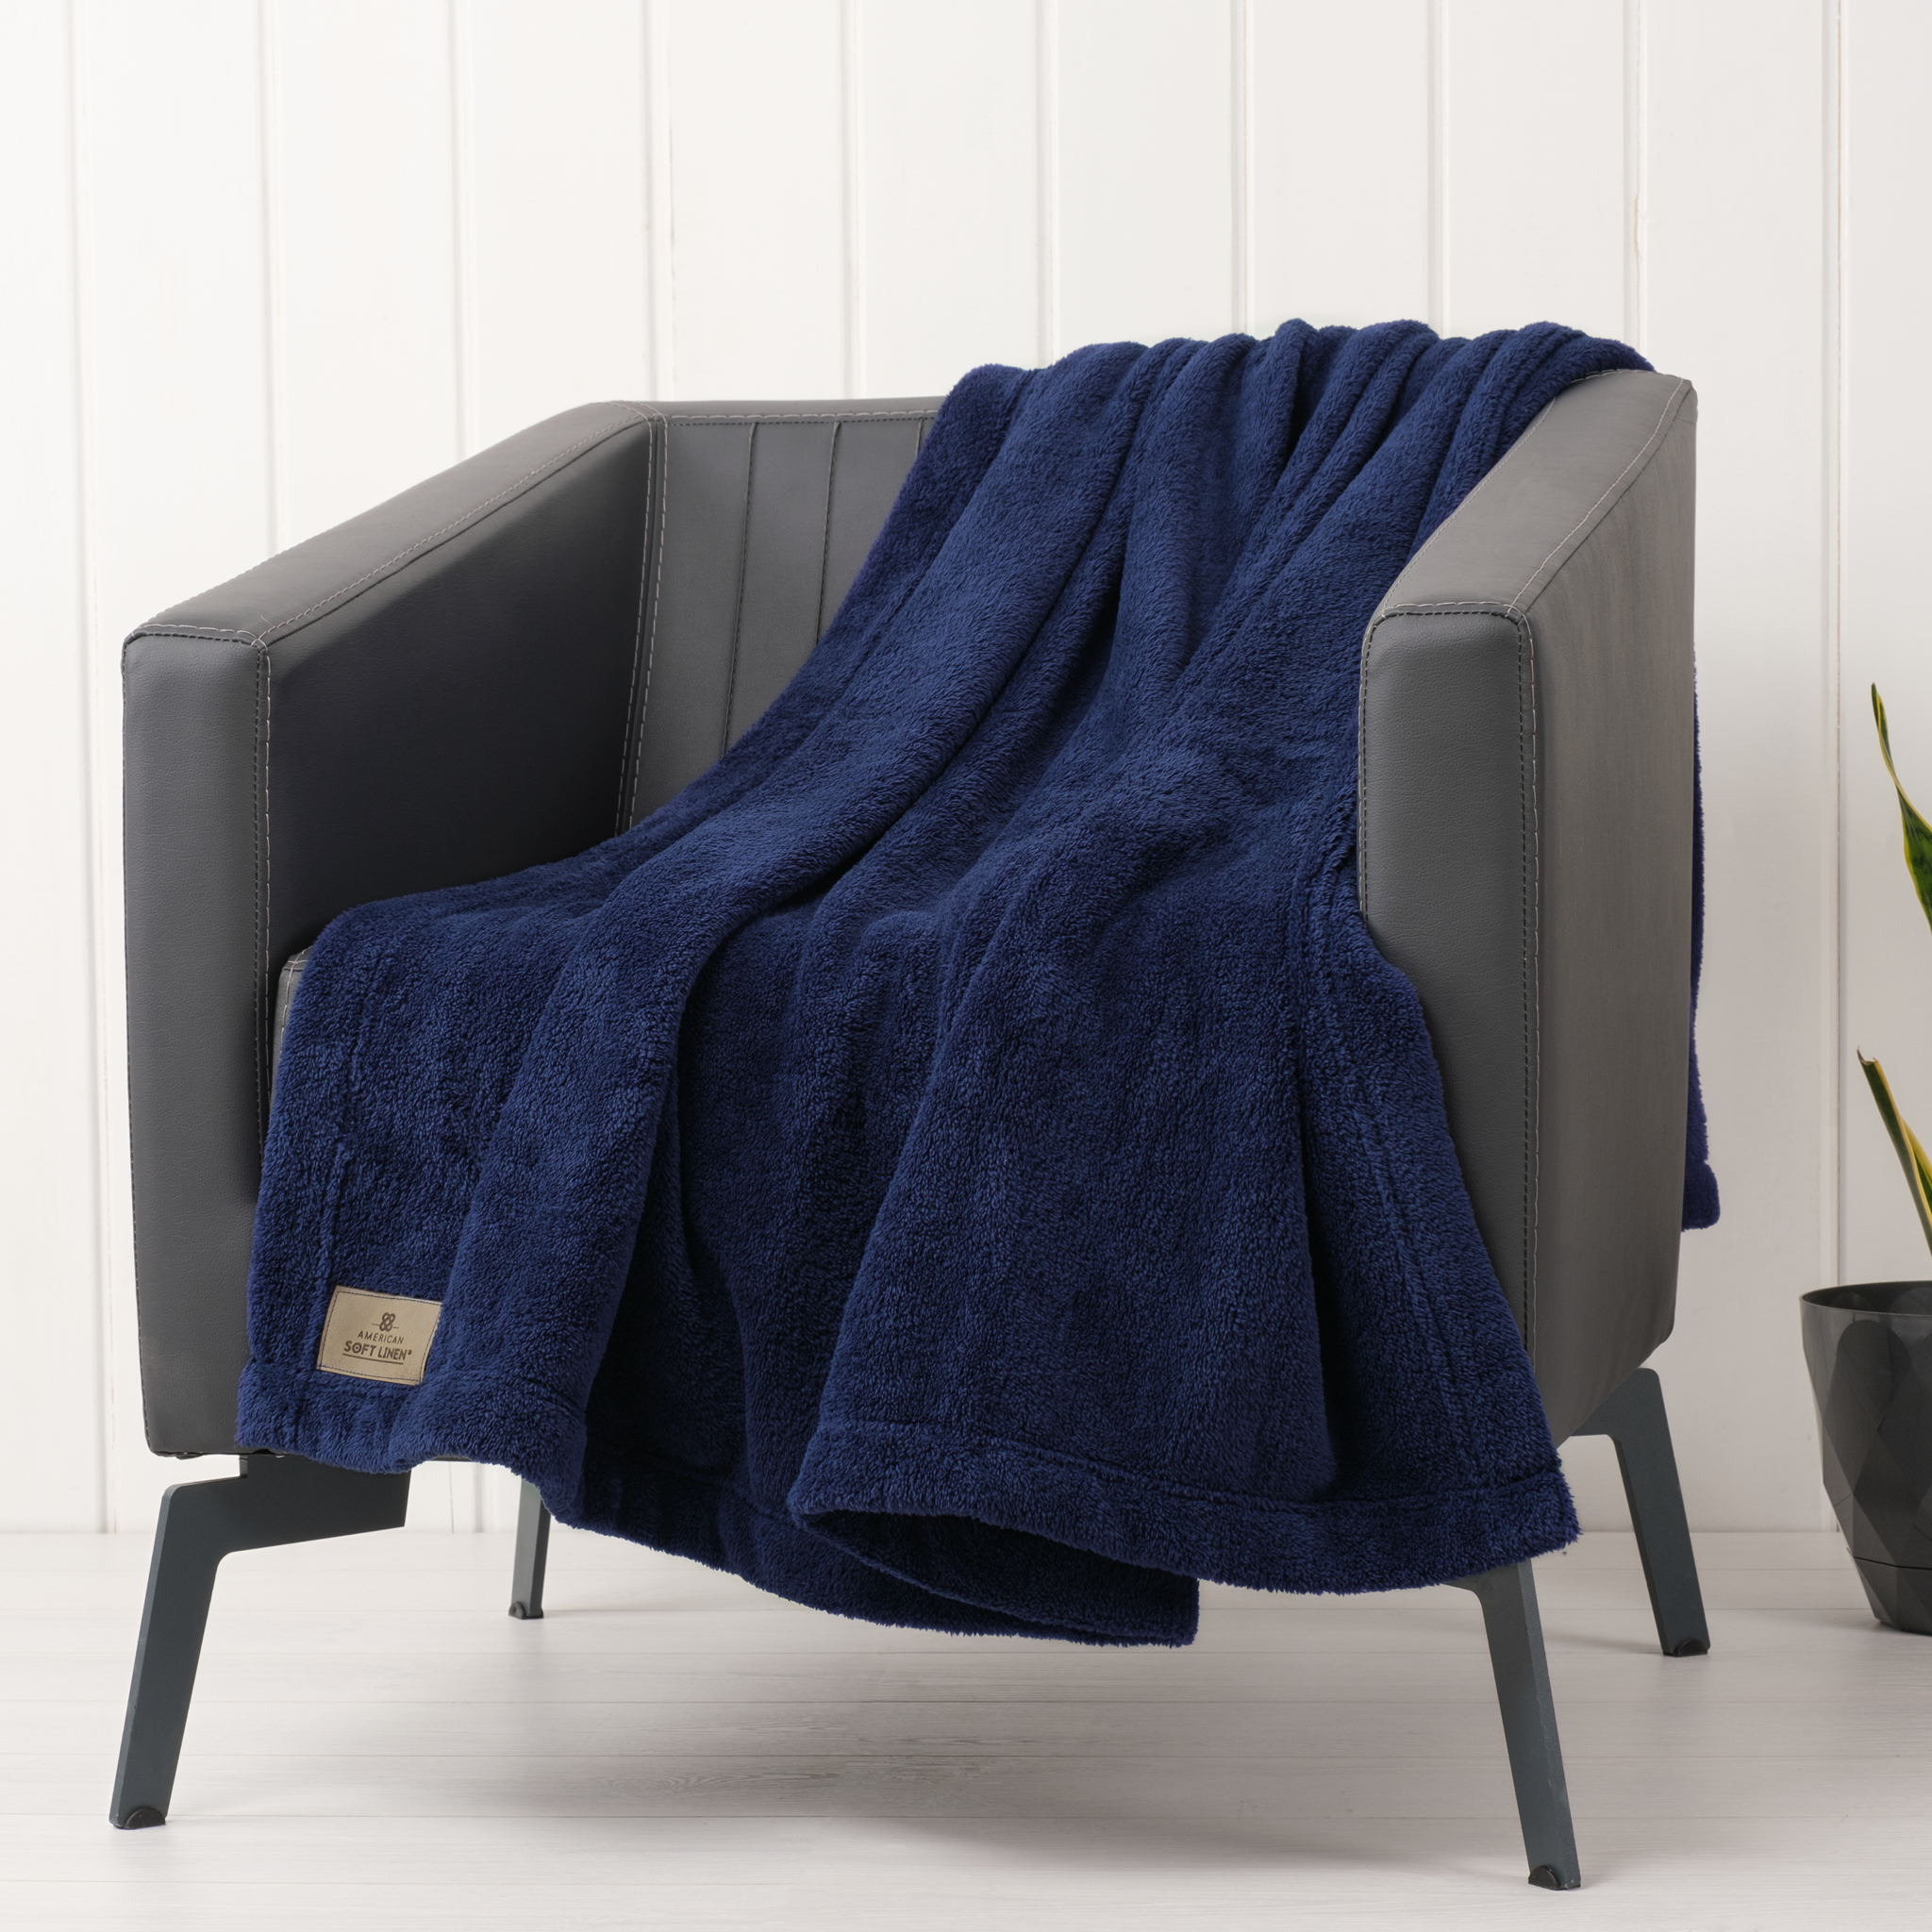 American Soft Linen - Bedding Fleece Blanket - Throw Size 50x60 inches - Navy-Blue - 1